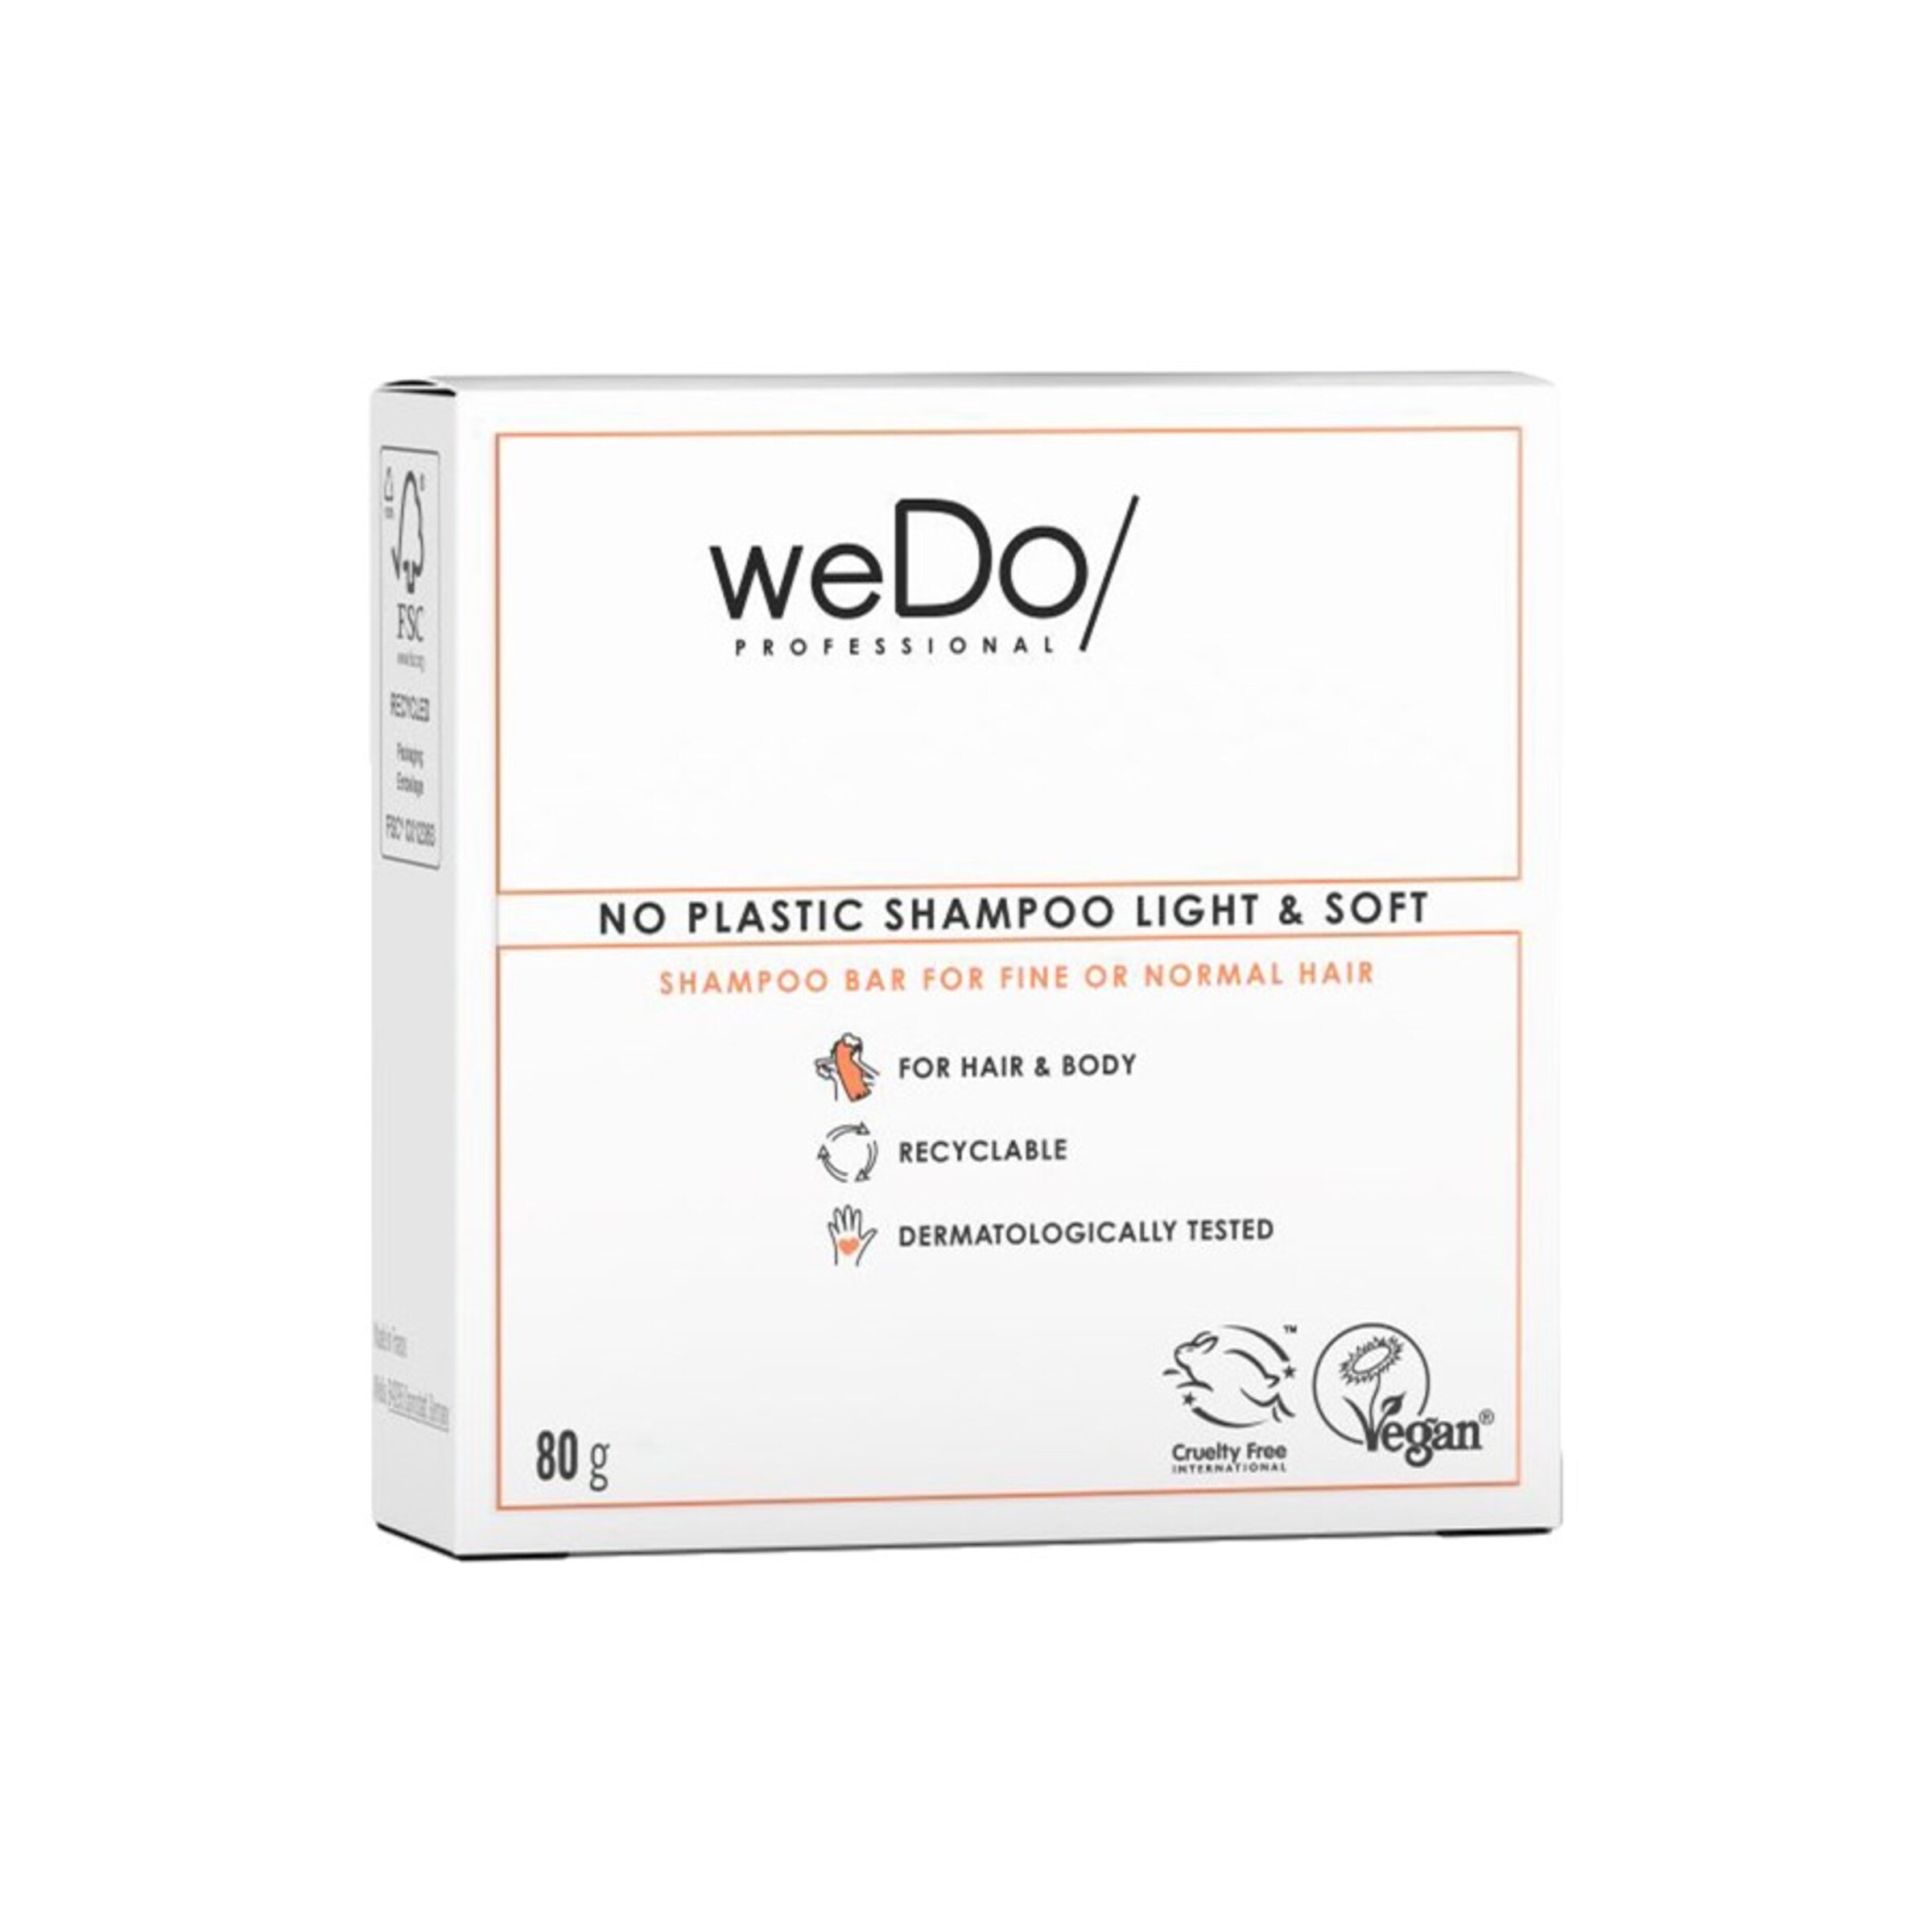 weDo/ Professional No Plastic Shampoo Light & Soft in 